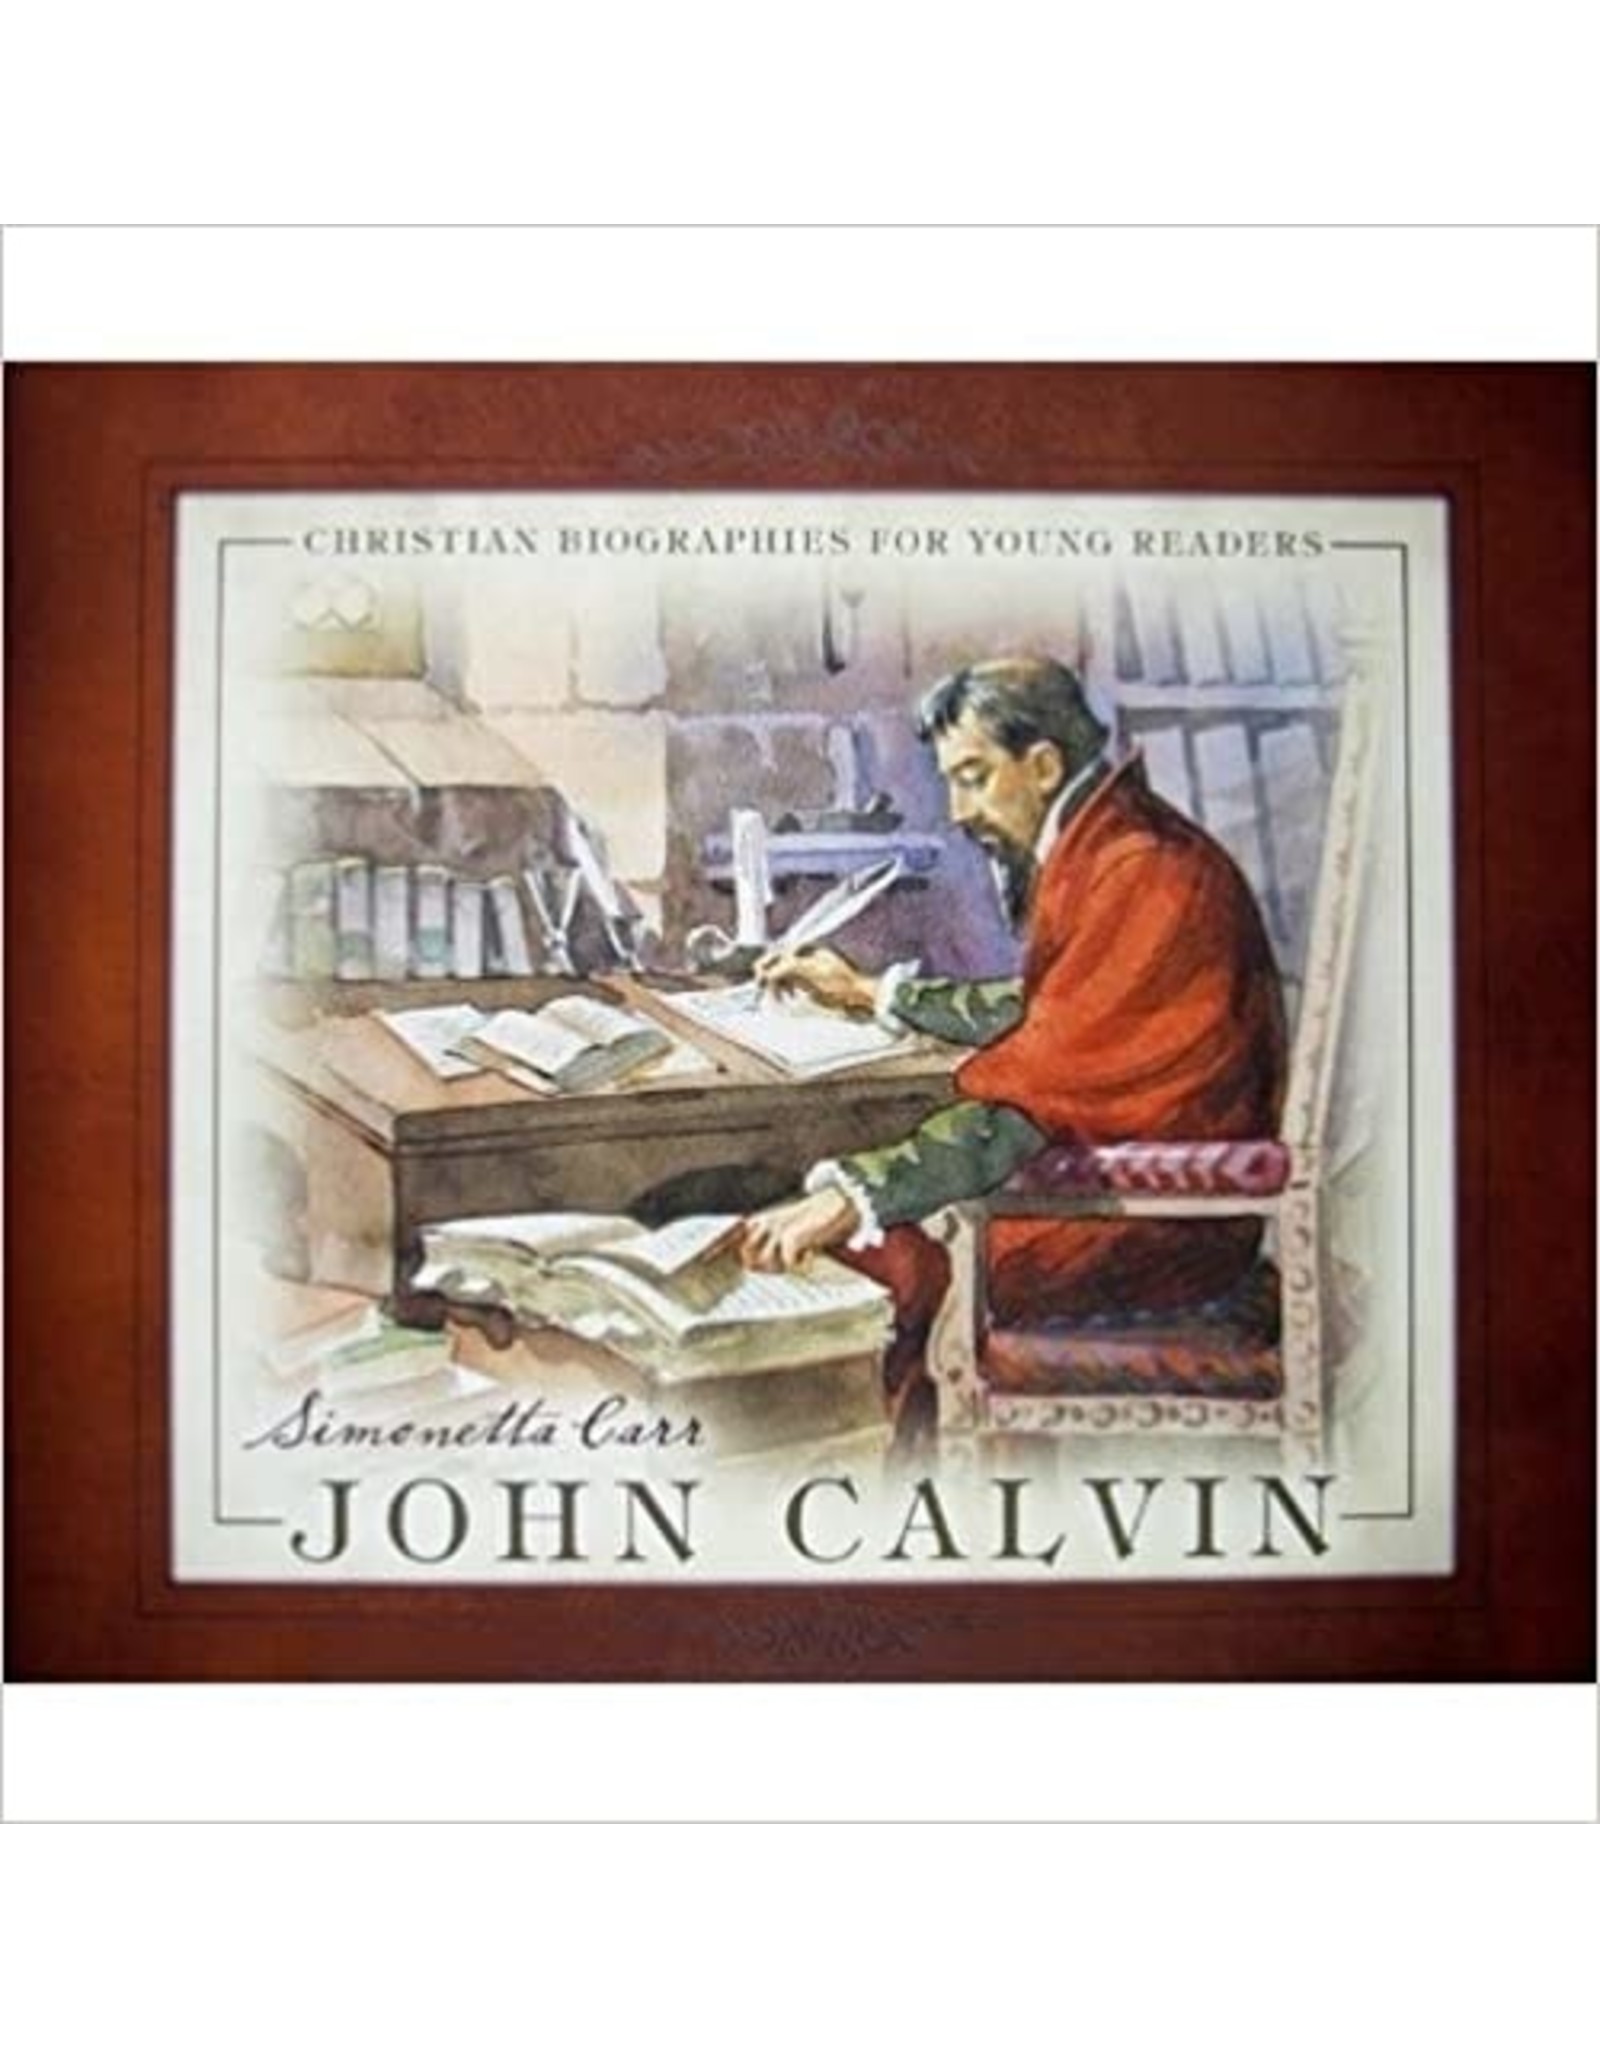 Simonetta Carr John Calvin, Christian Biographies for Young Readers